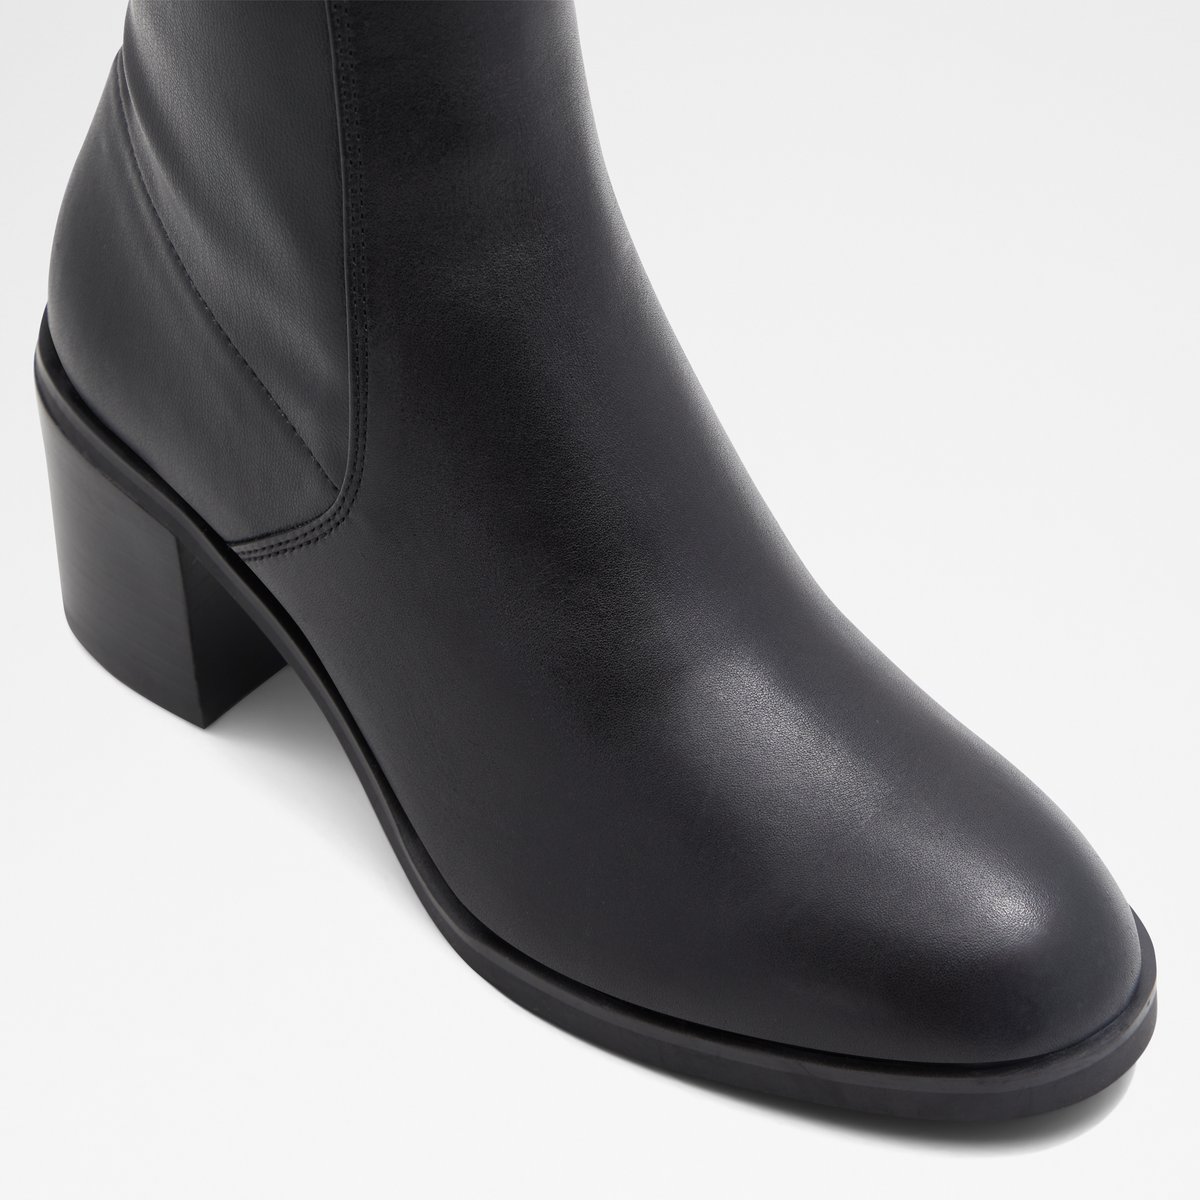 Ranobrerel Black Women's Ankle boots | ALDO Canada